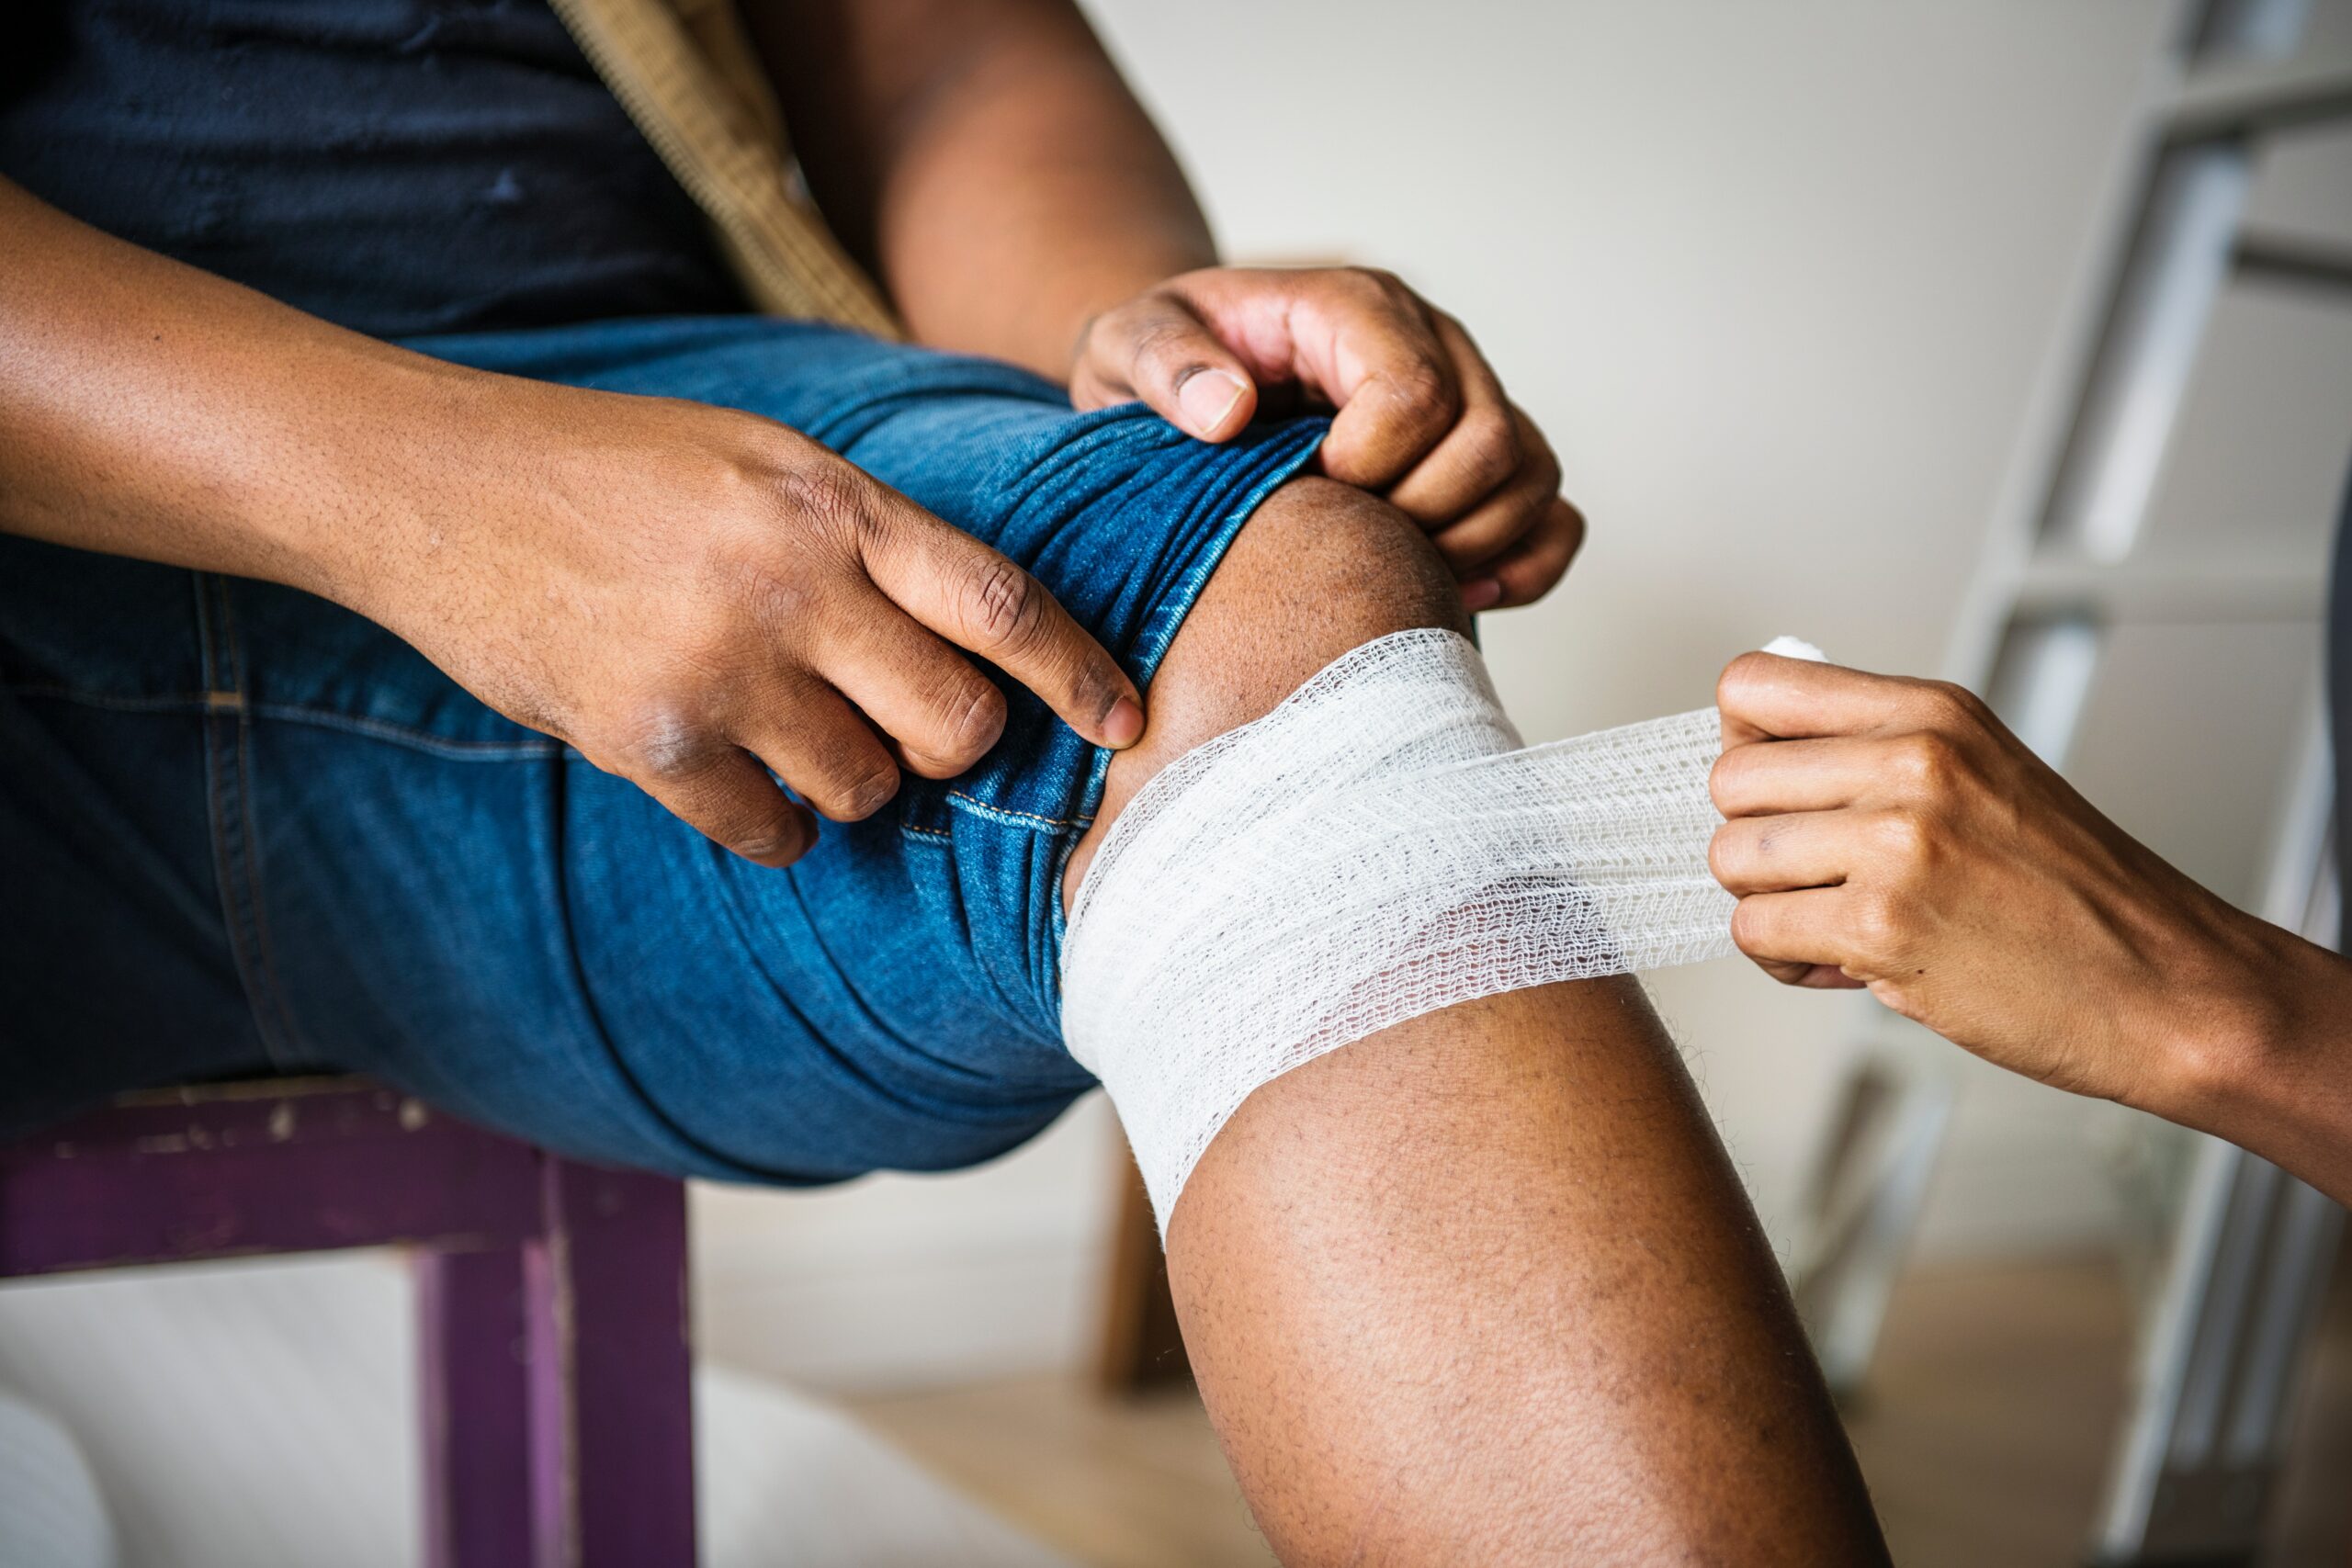 Wrapping gauze around an unseen leg injury